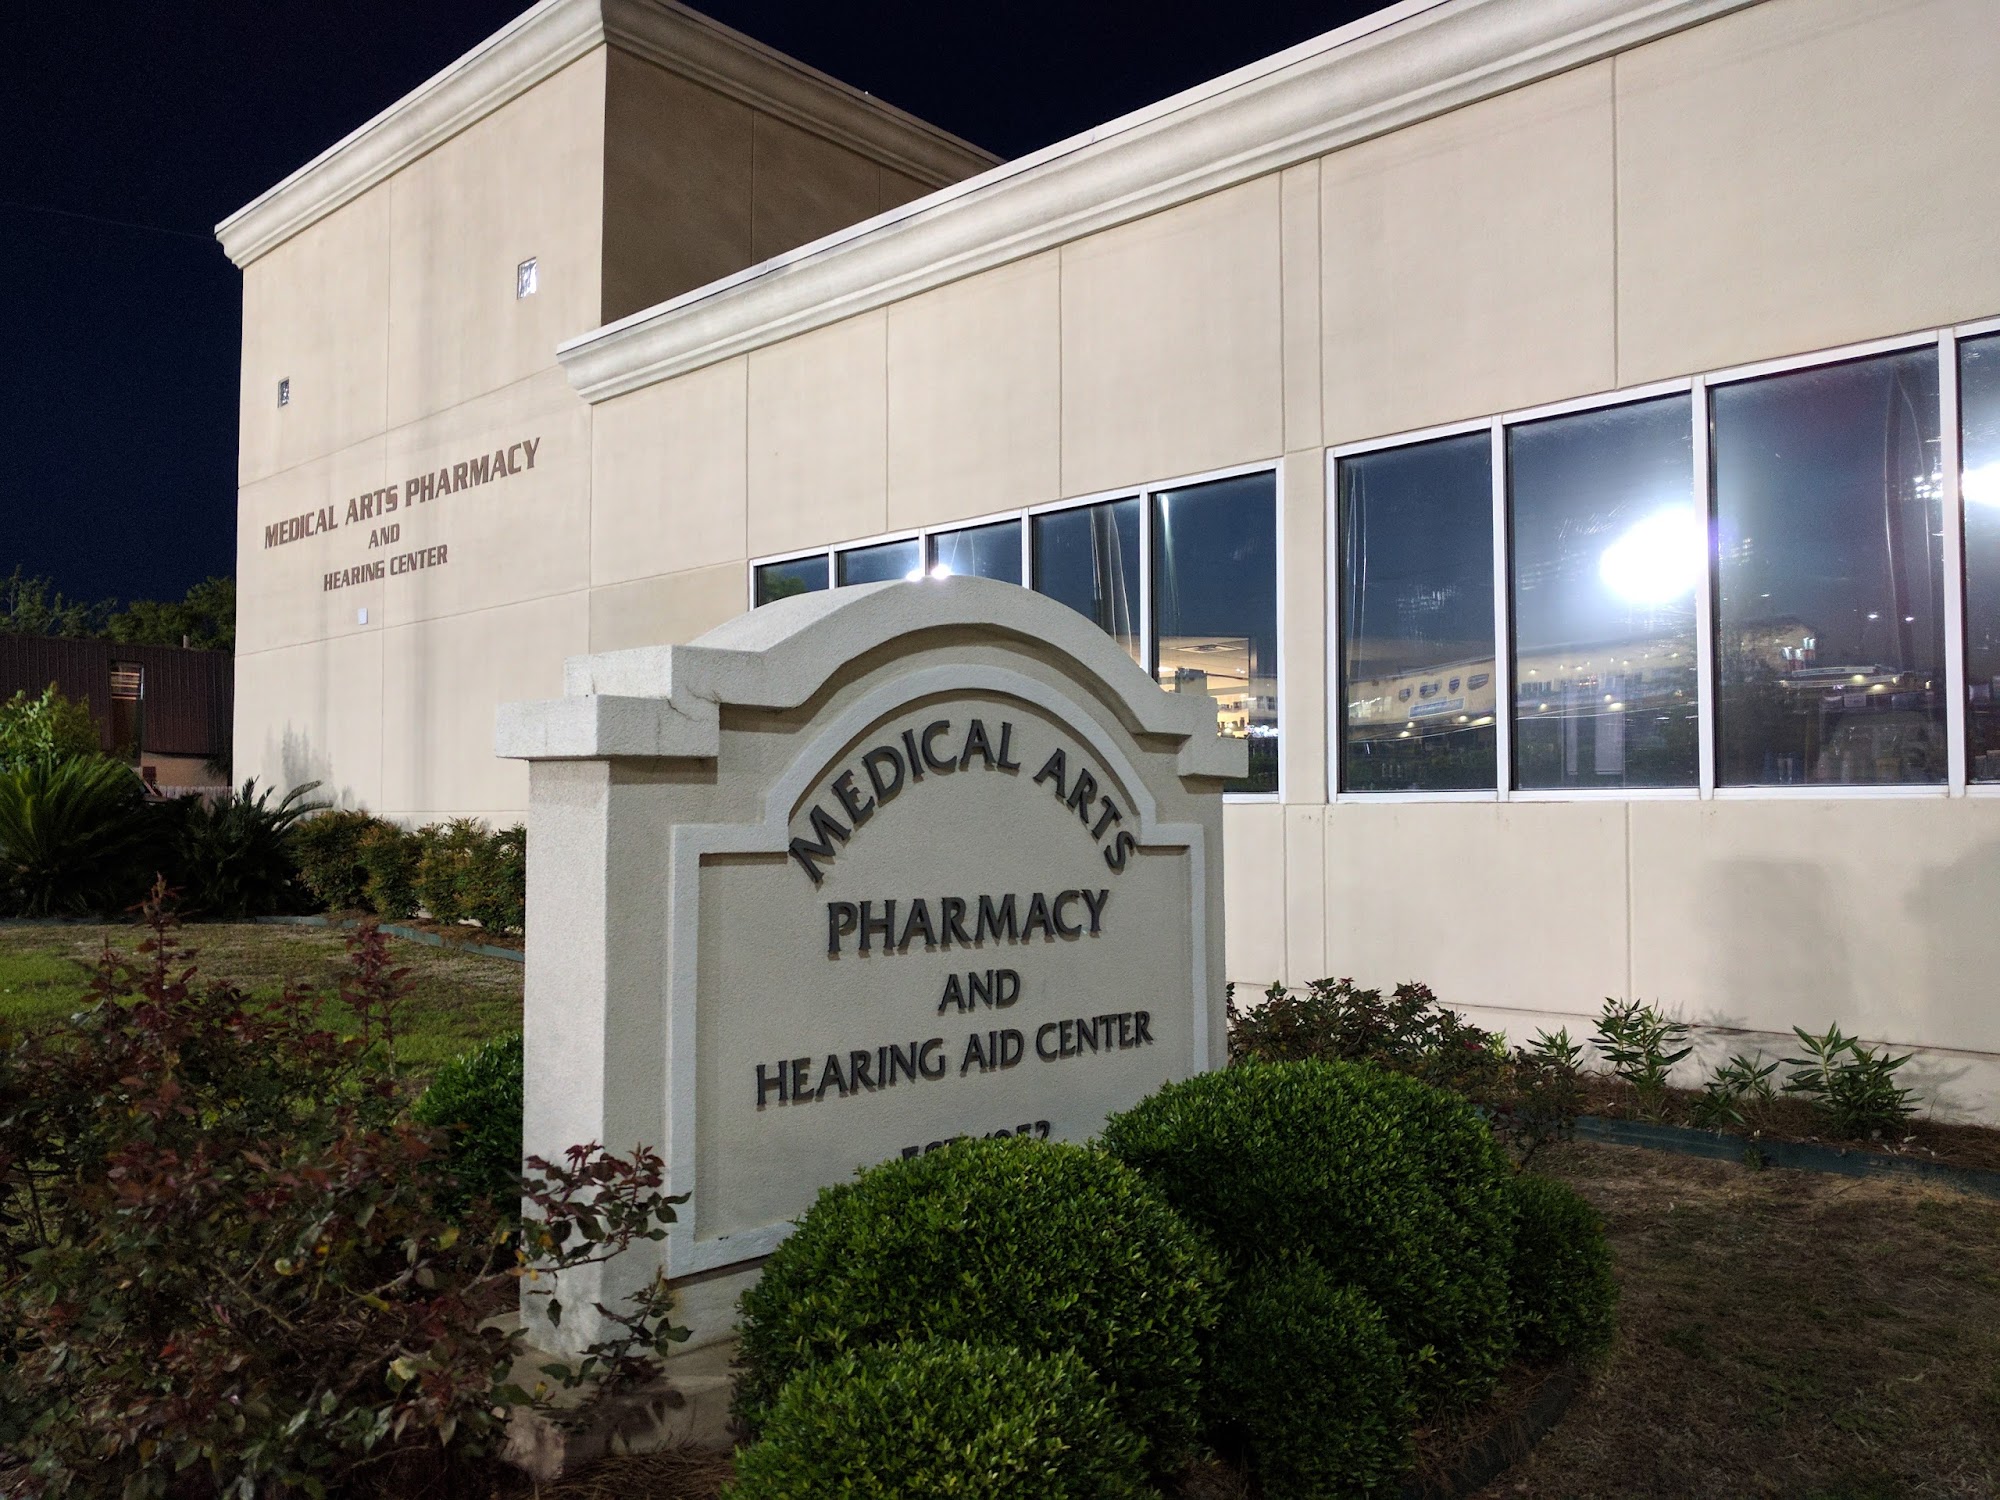 Medical Arts Pharmacy & Hearing Aid Center